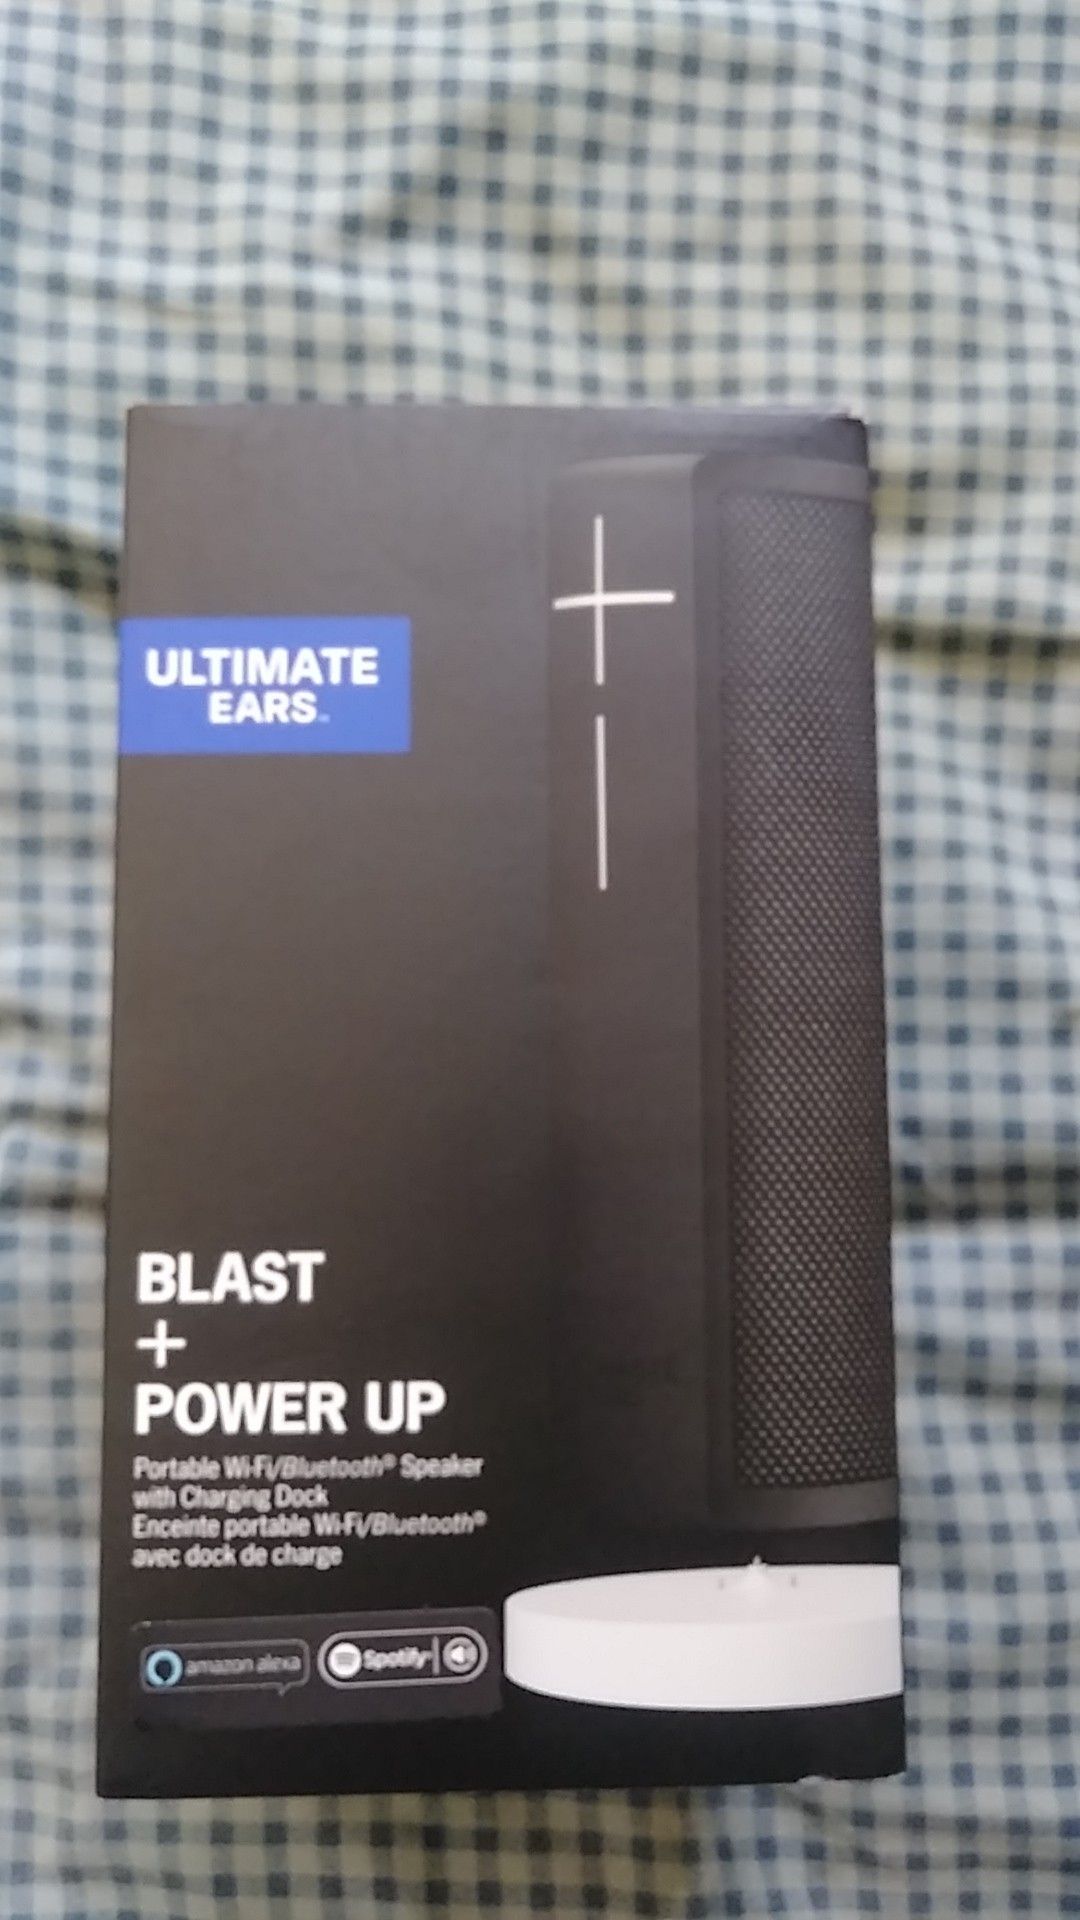 Brand new UE blast + power up Bluetooth speaker